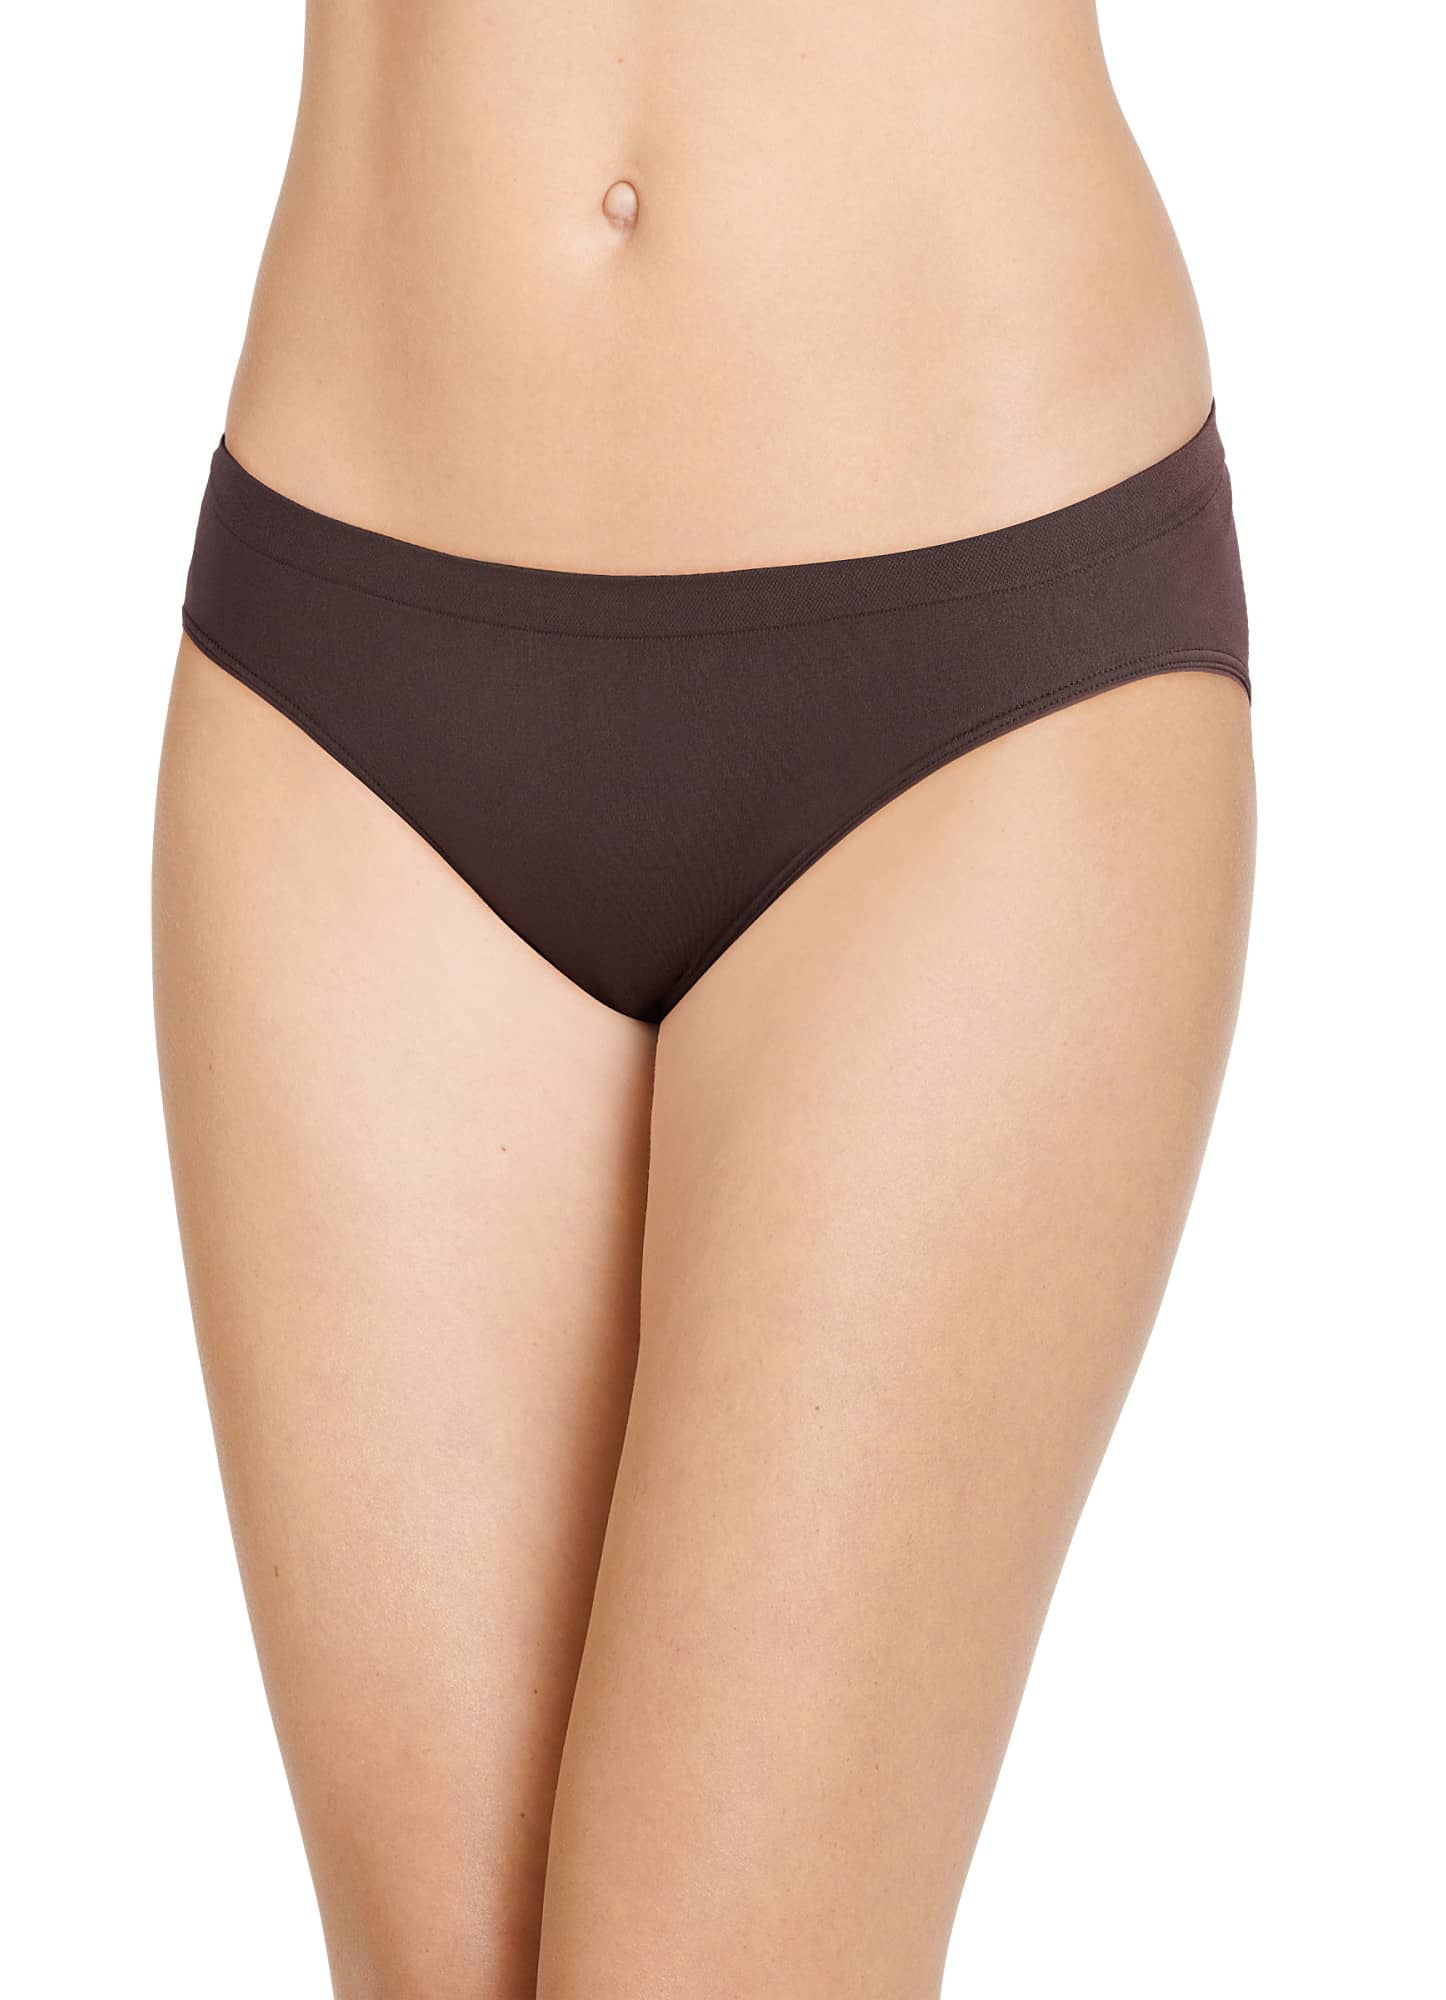 Jockey Womens Modern Micro Bikini Underwear Bikini Briefs Nylon 9